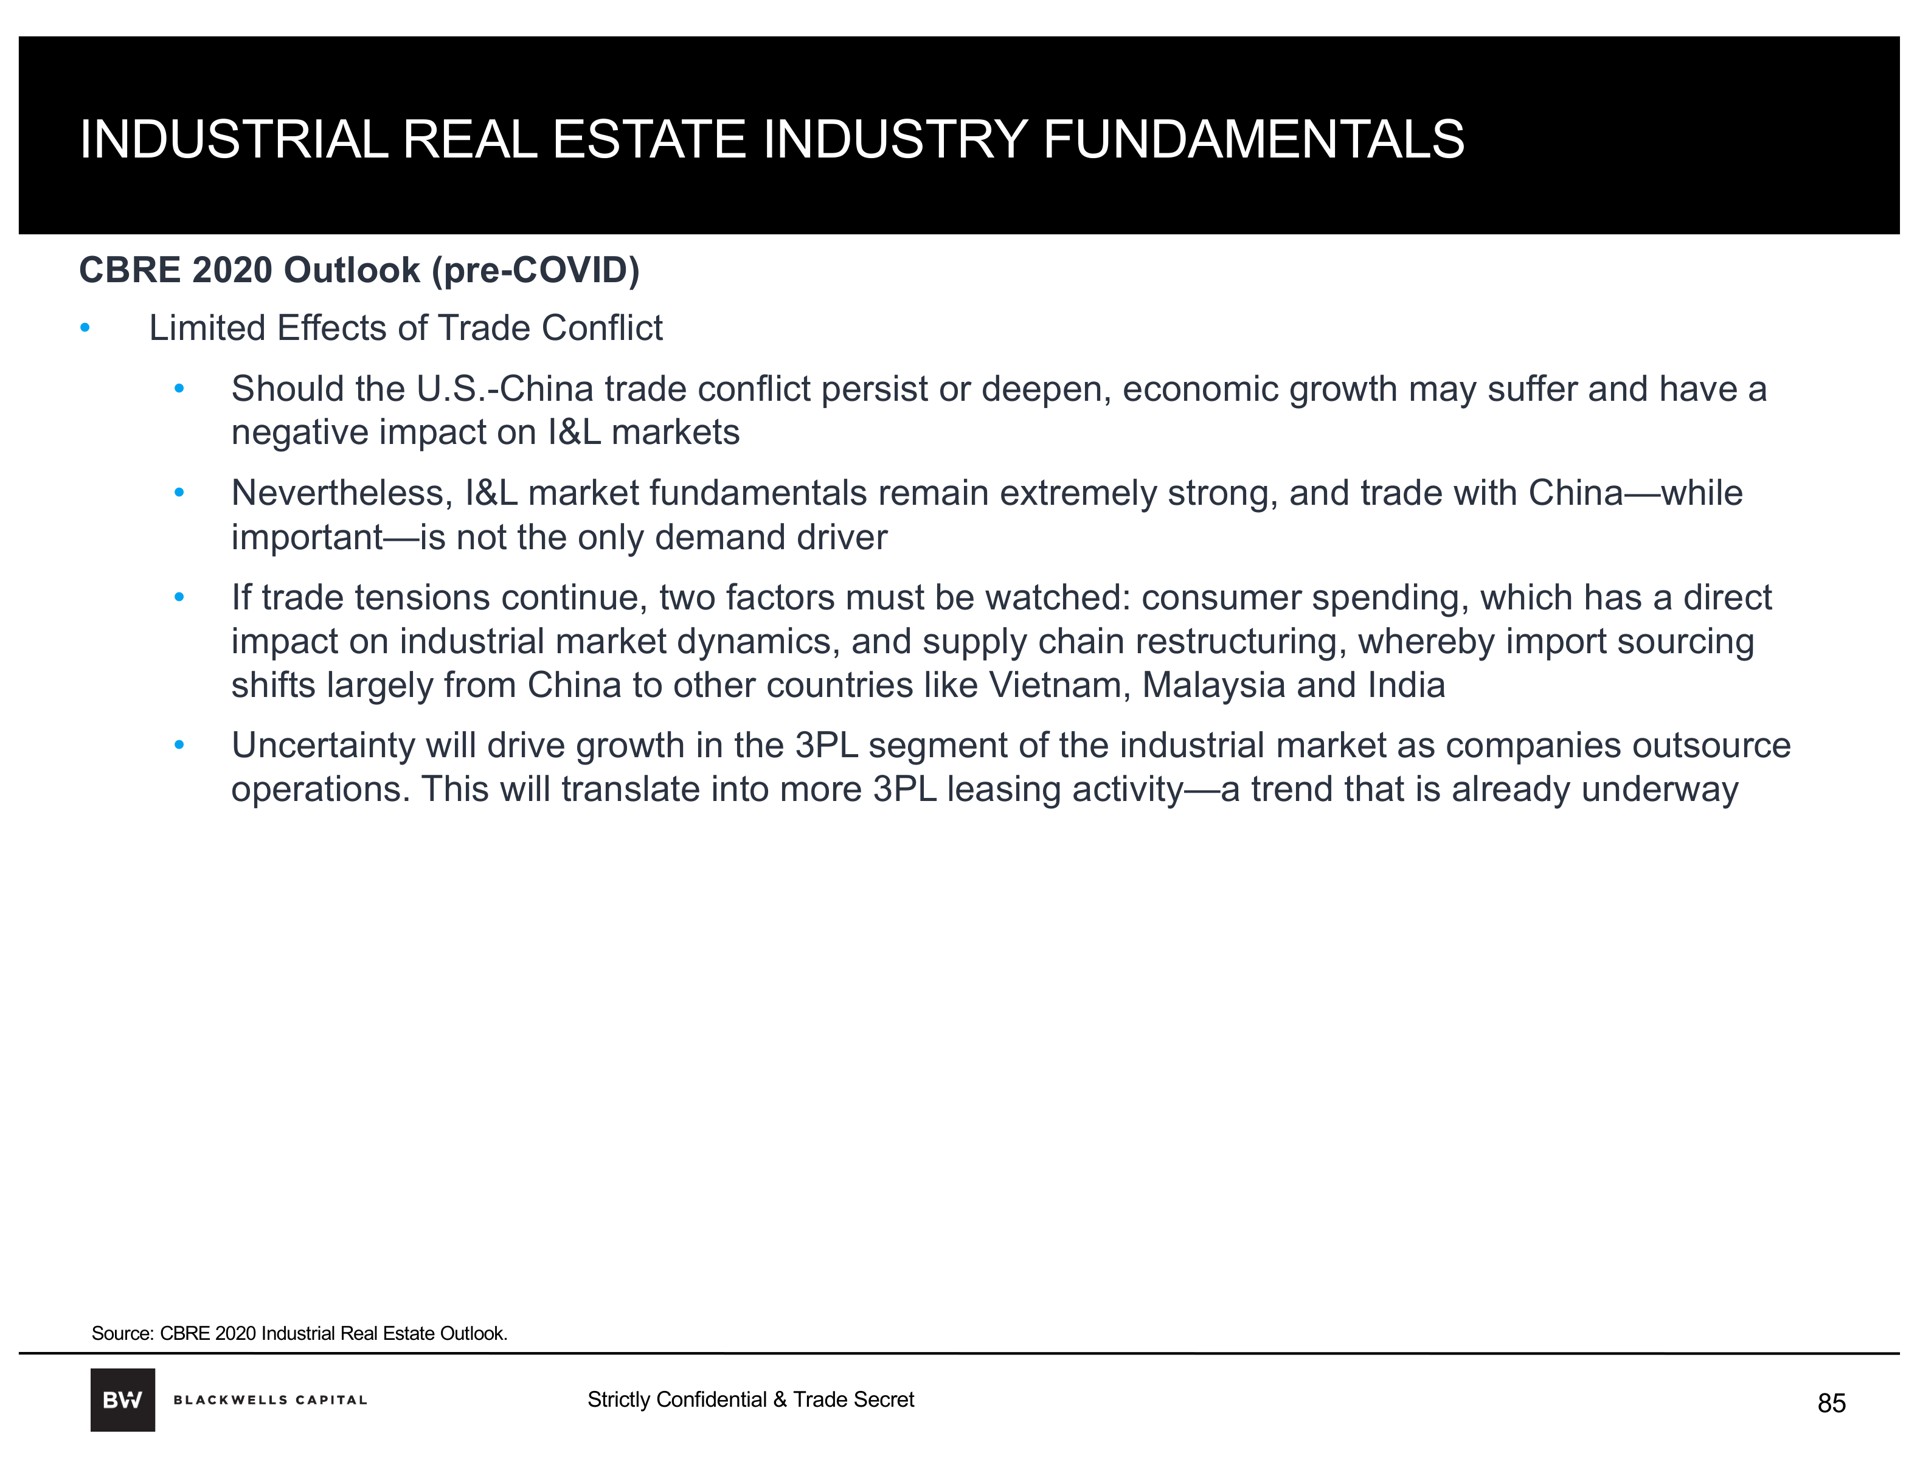 industrial real estate industry fundamentals | Blackwells Capital